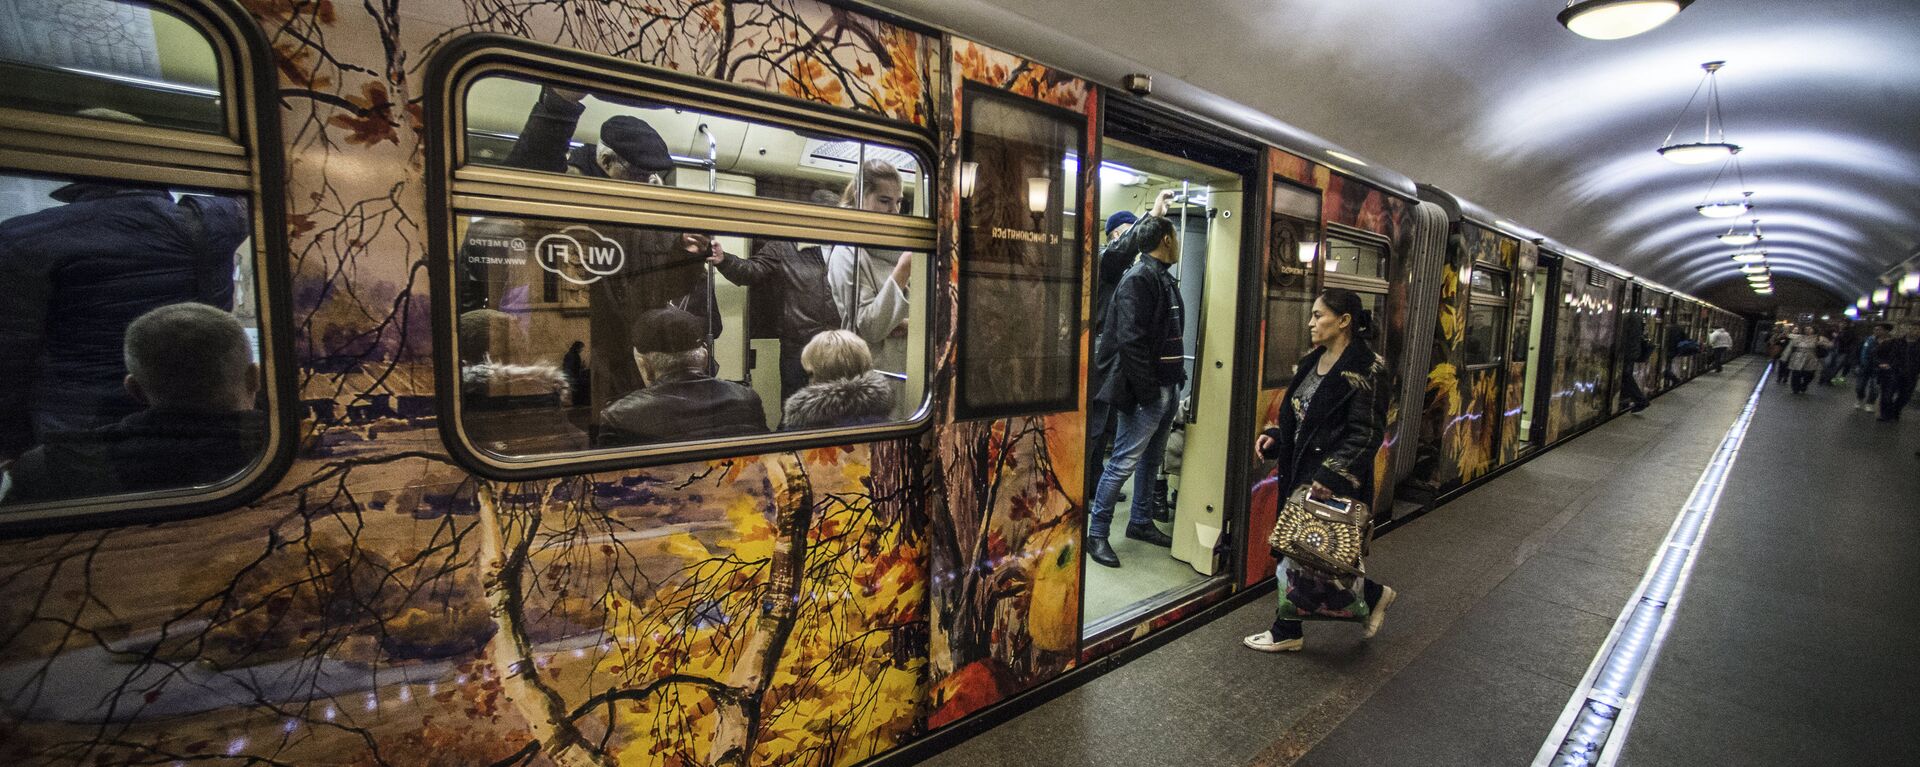 مترو أنفاق موسكو - سبوتنيك عربي, 1920, 30.10.2015